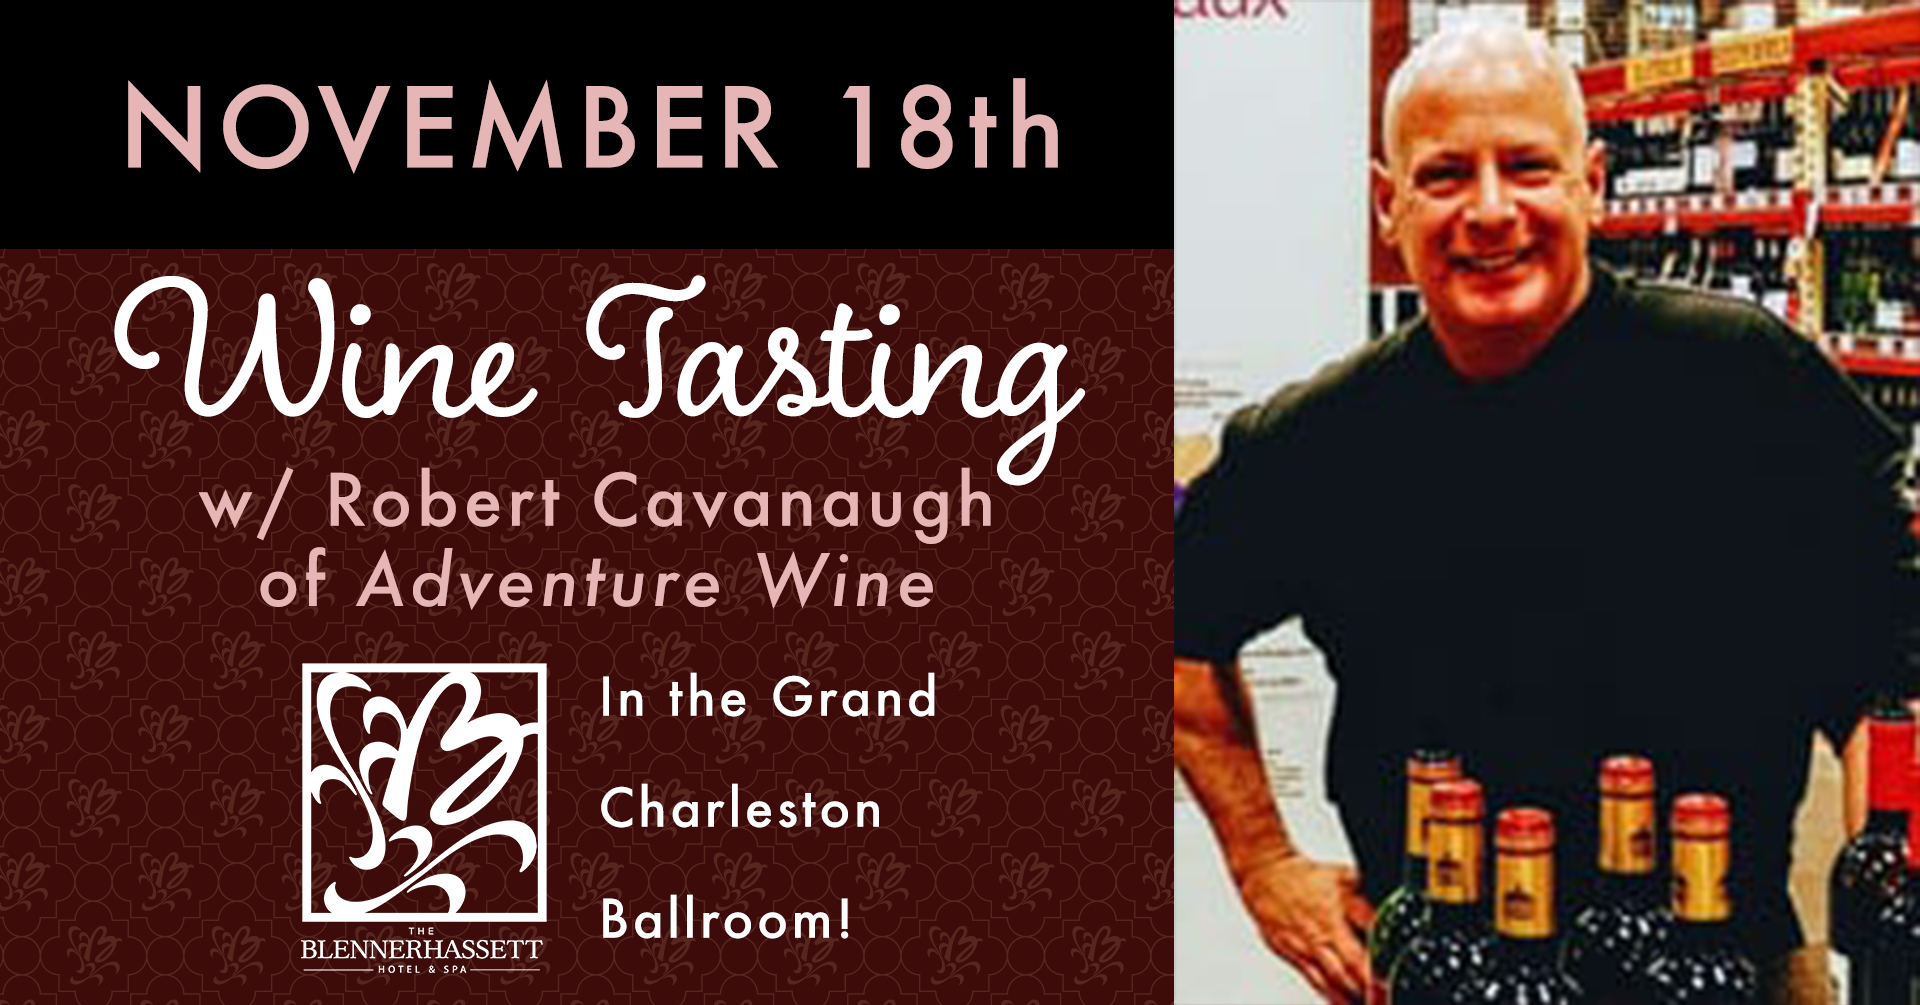 Wine Tasting with Robert Cavanaugh of Adventure Wine in the Grand Charleston Ballroom on November 18th